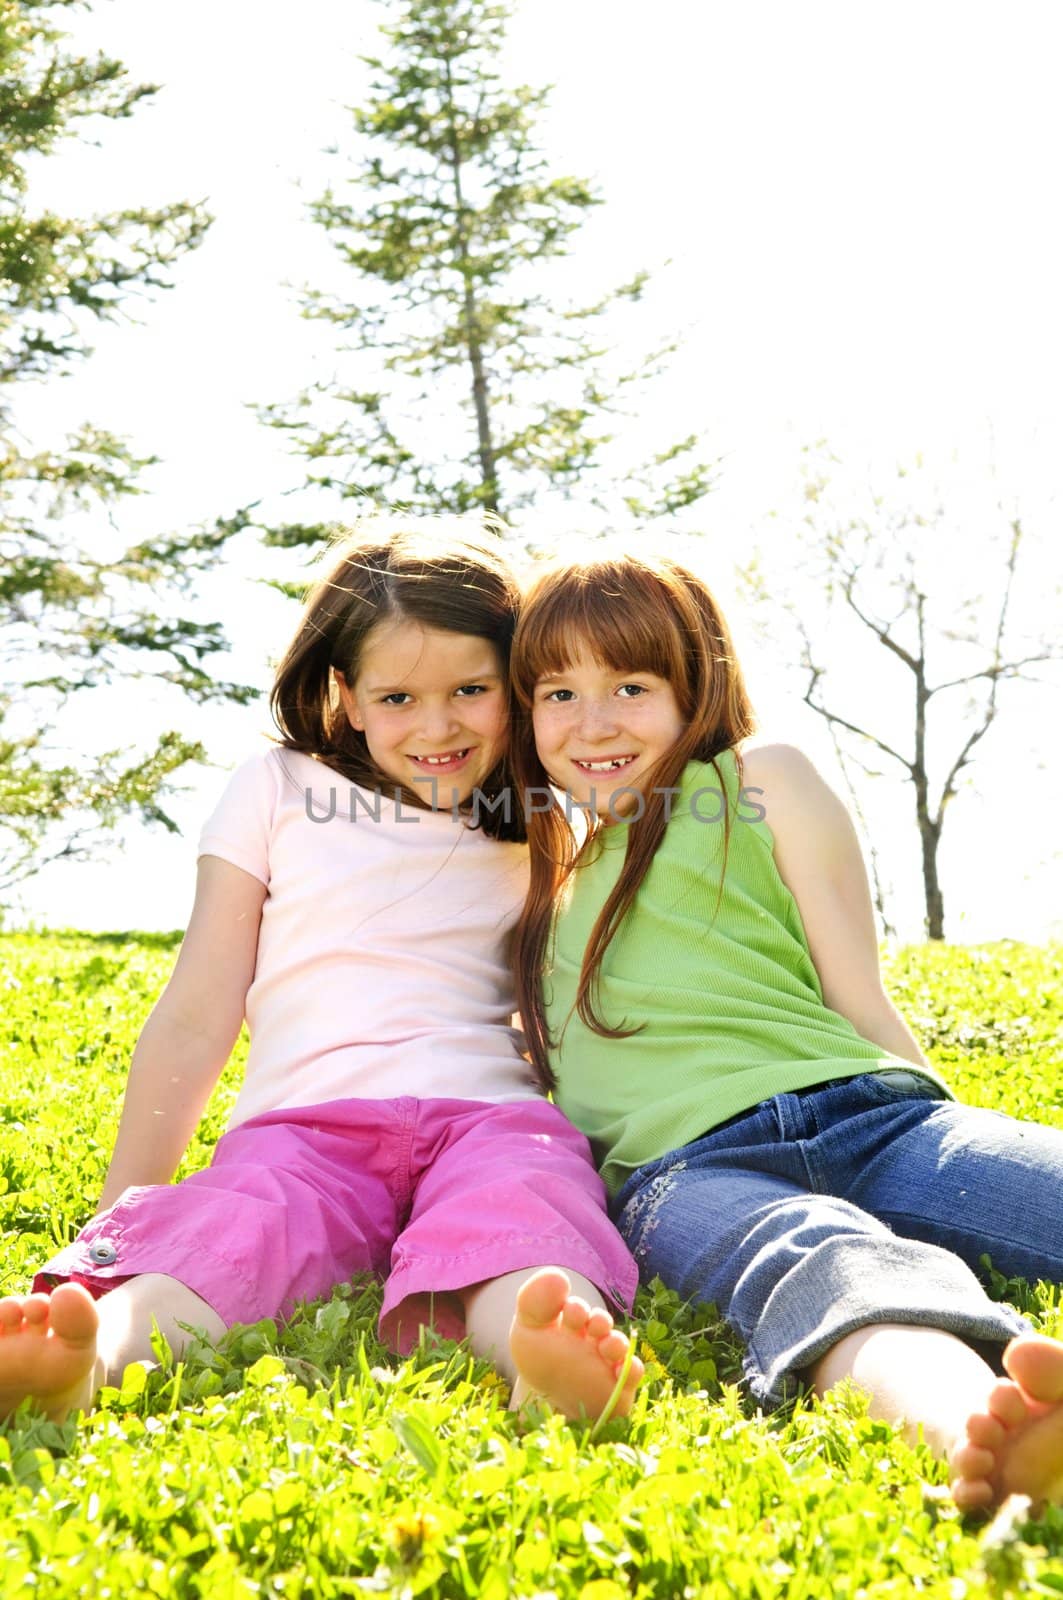 Portrait of happy girls sitting on grass